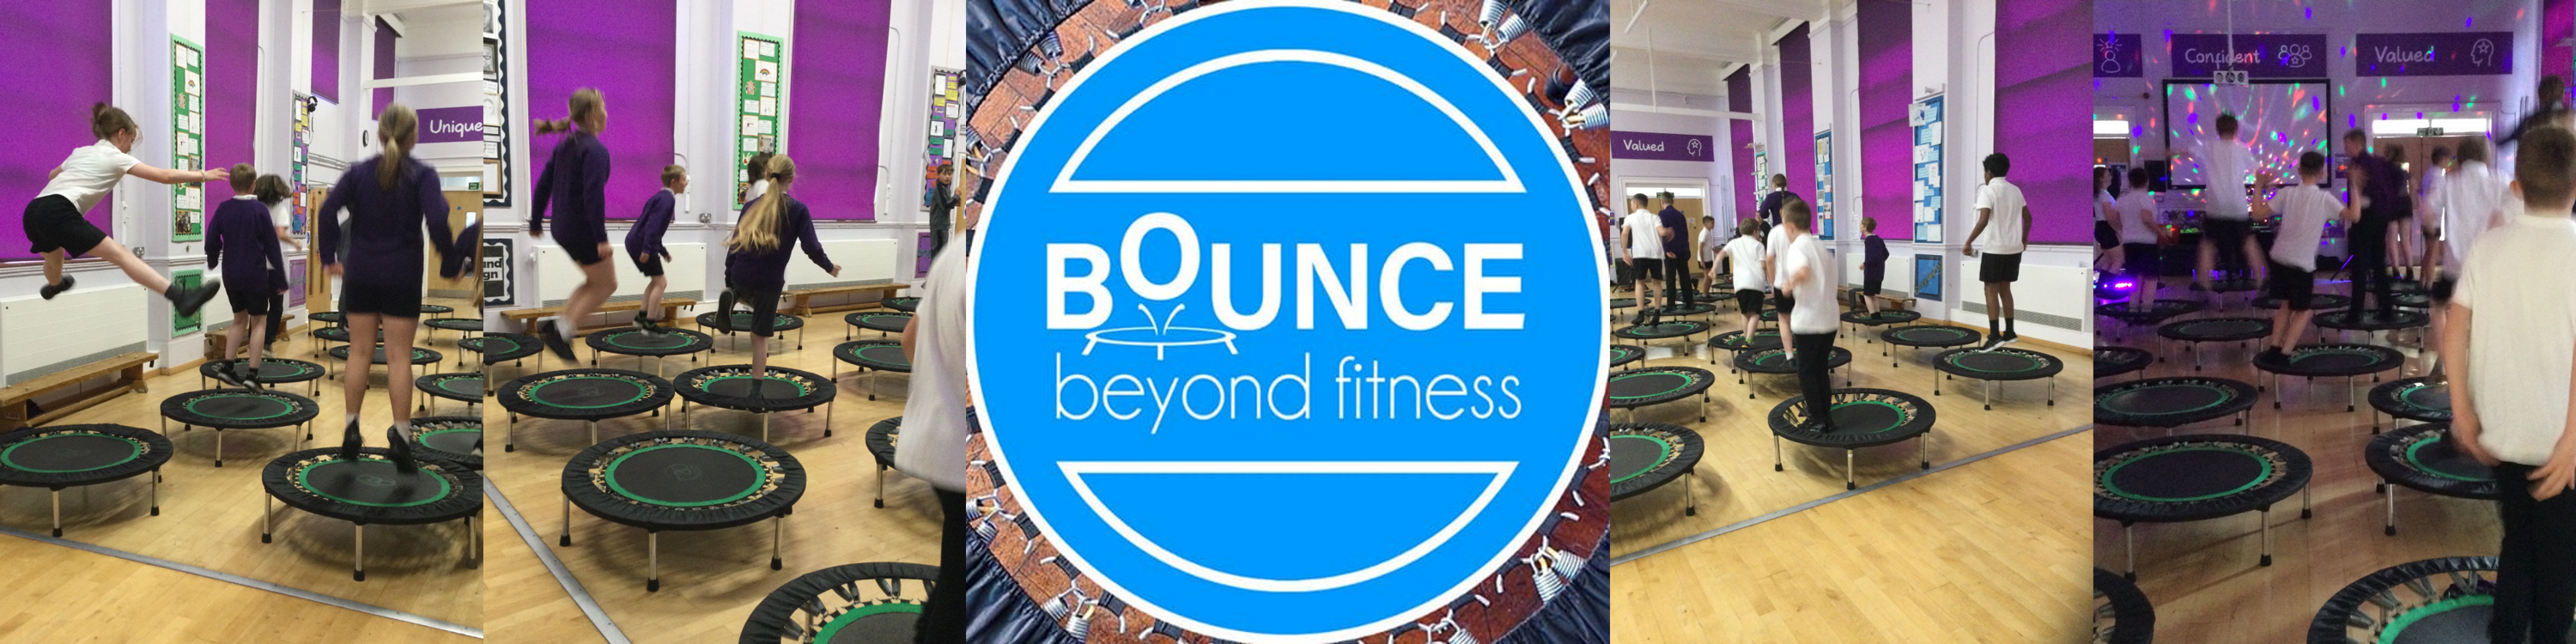 Bounce beyond